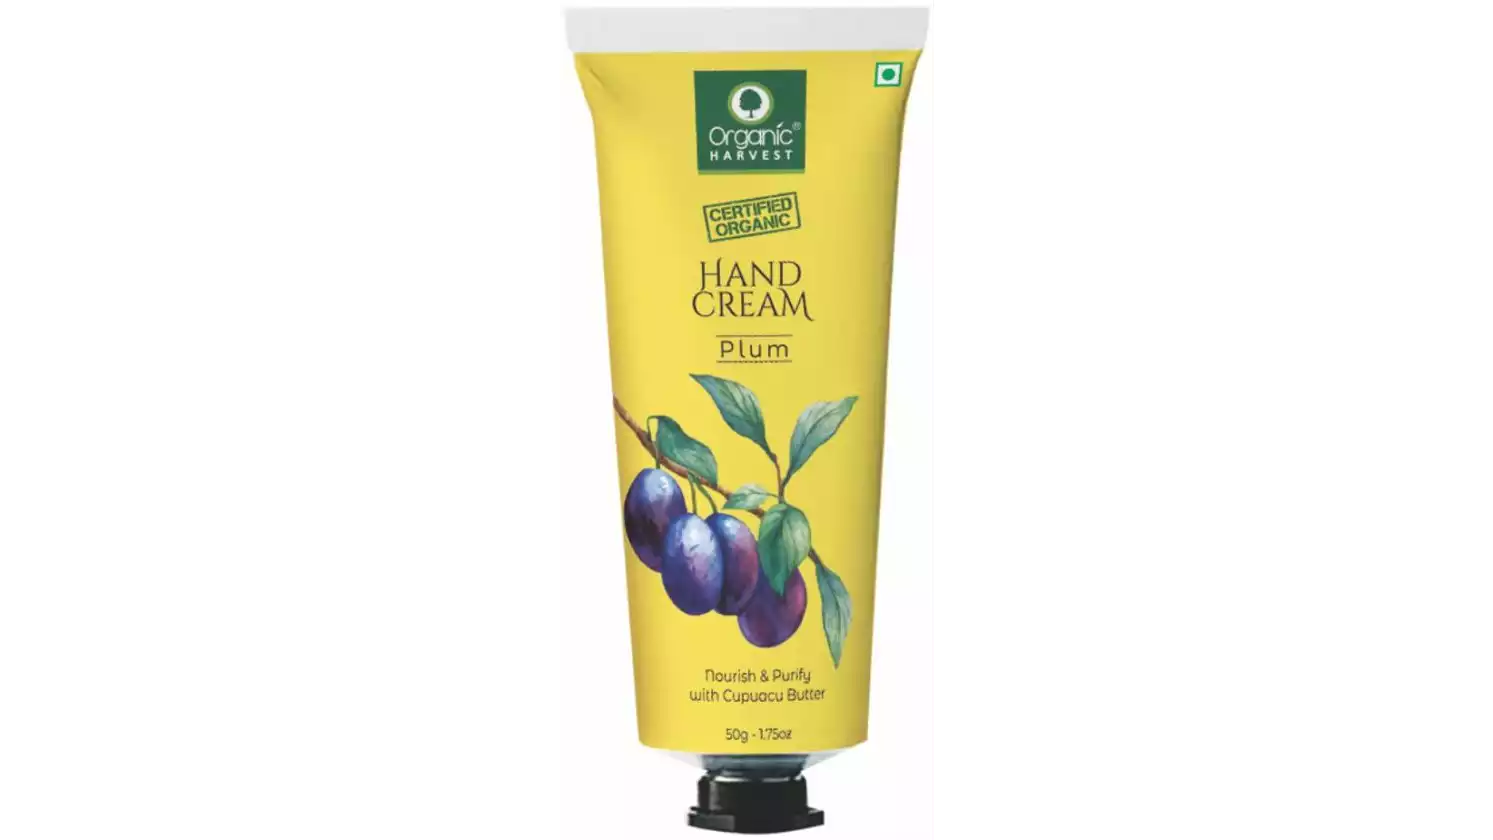 Organic Harvest Hand Cream, Plum, Nourish & Purify with Cupuacu Butter (50g)